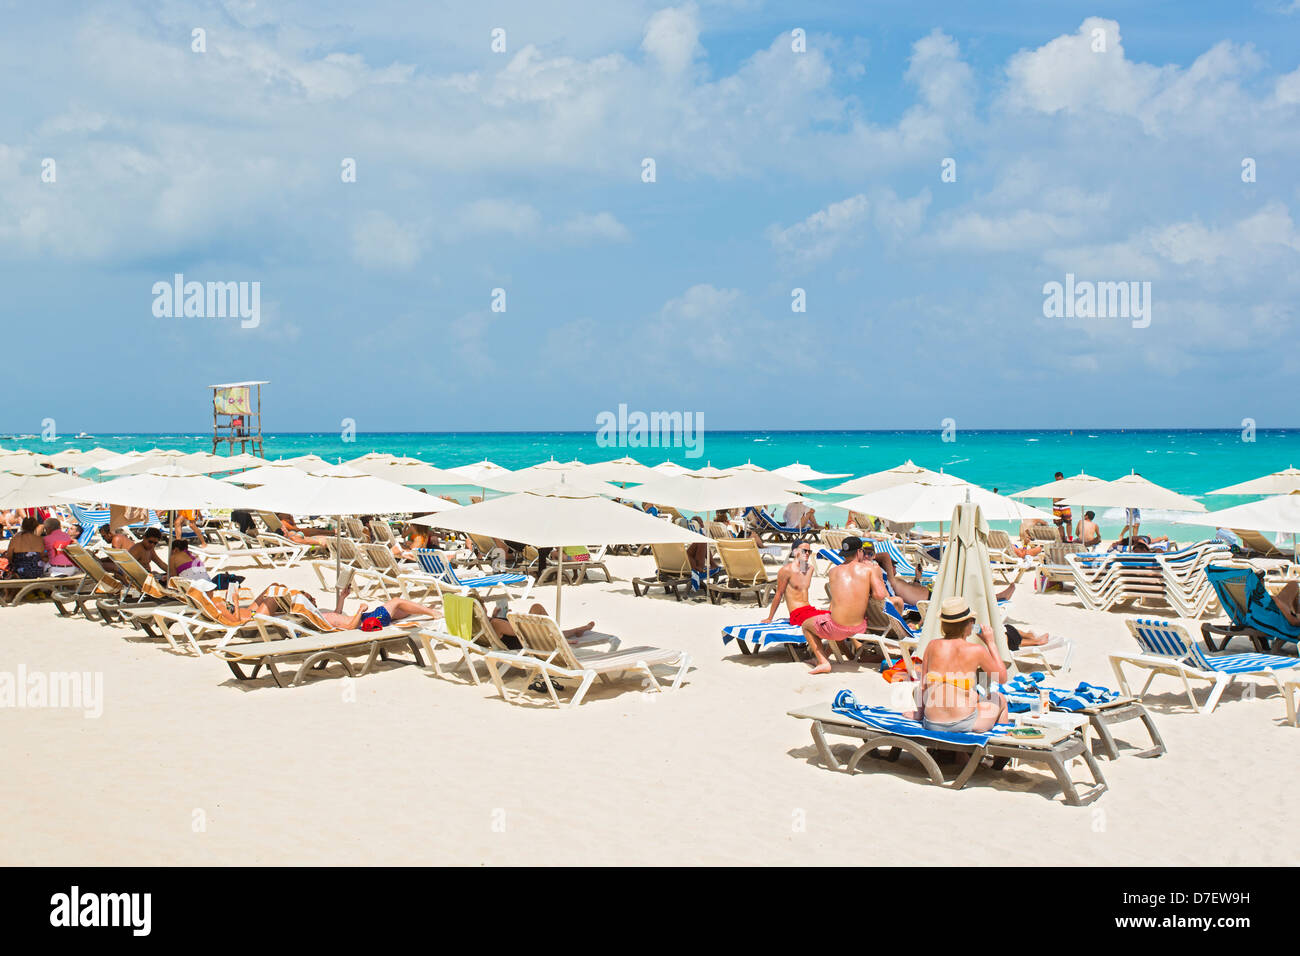 Mamitas Beach Club, people enjoying themselves on the beach Stock Photo -  Alamy